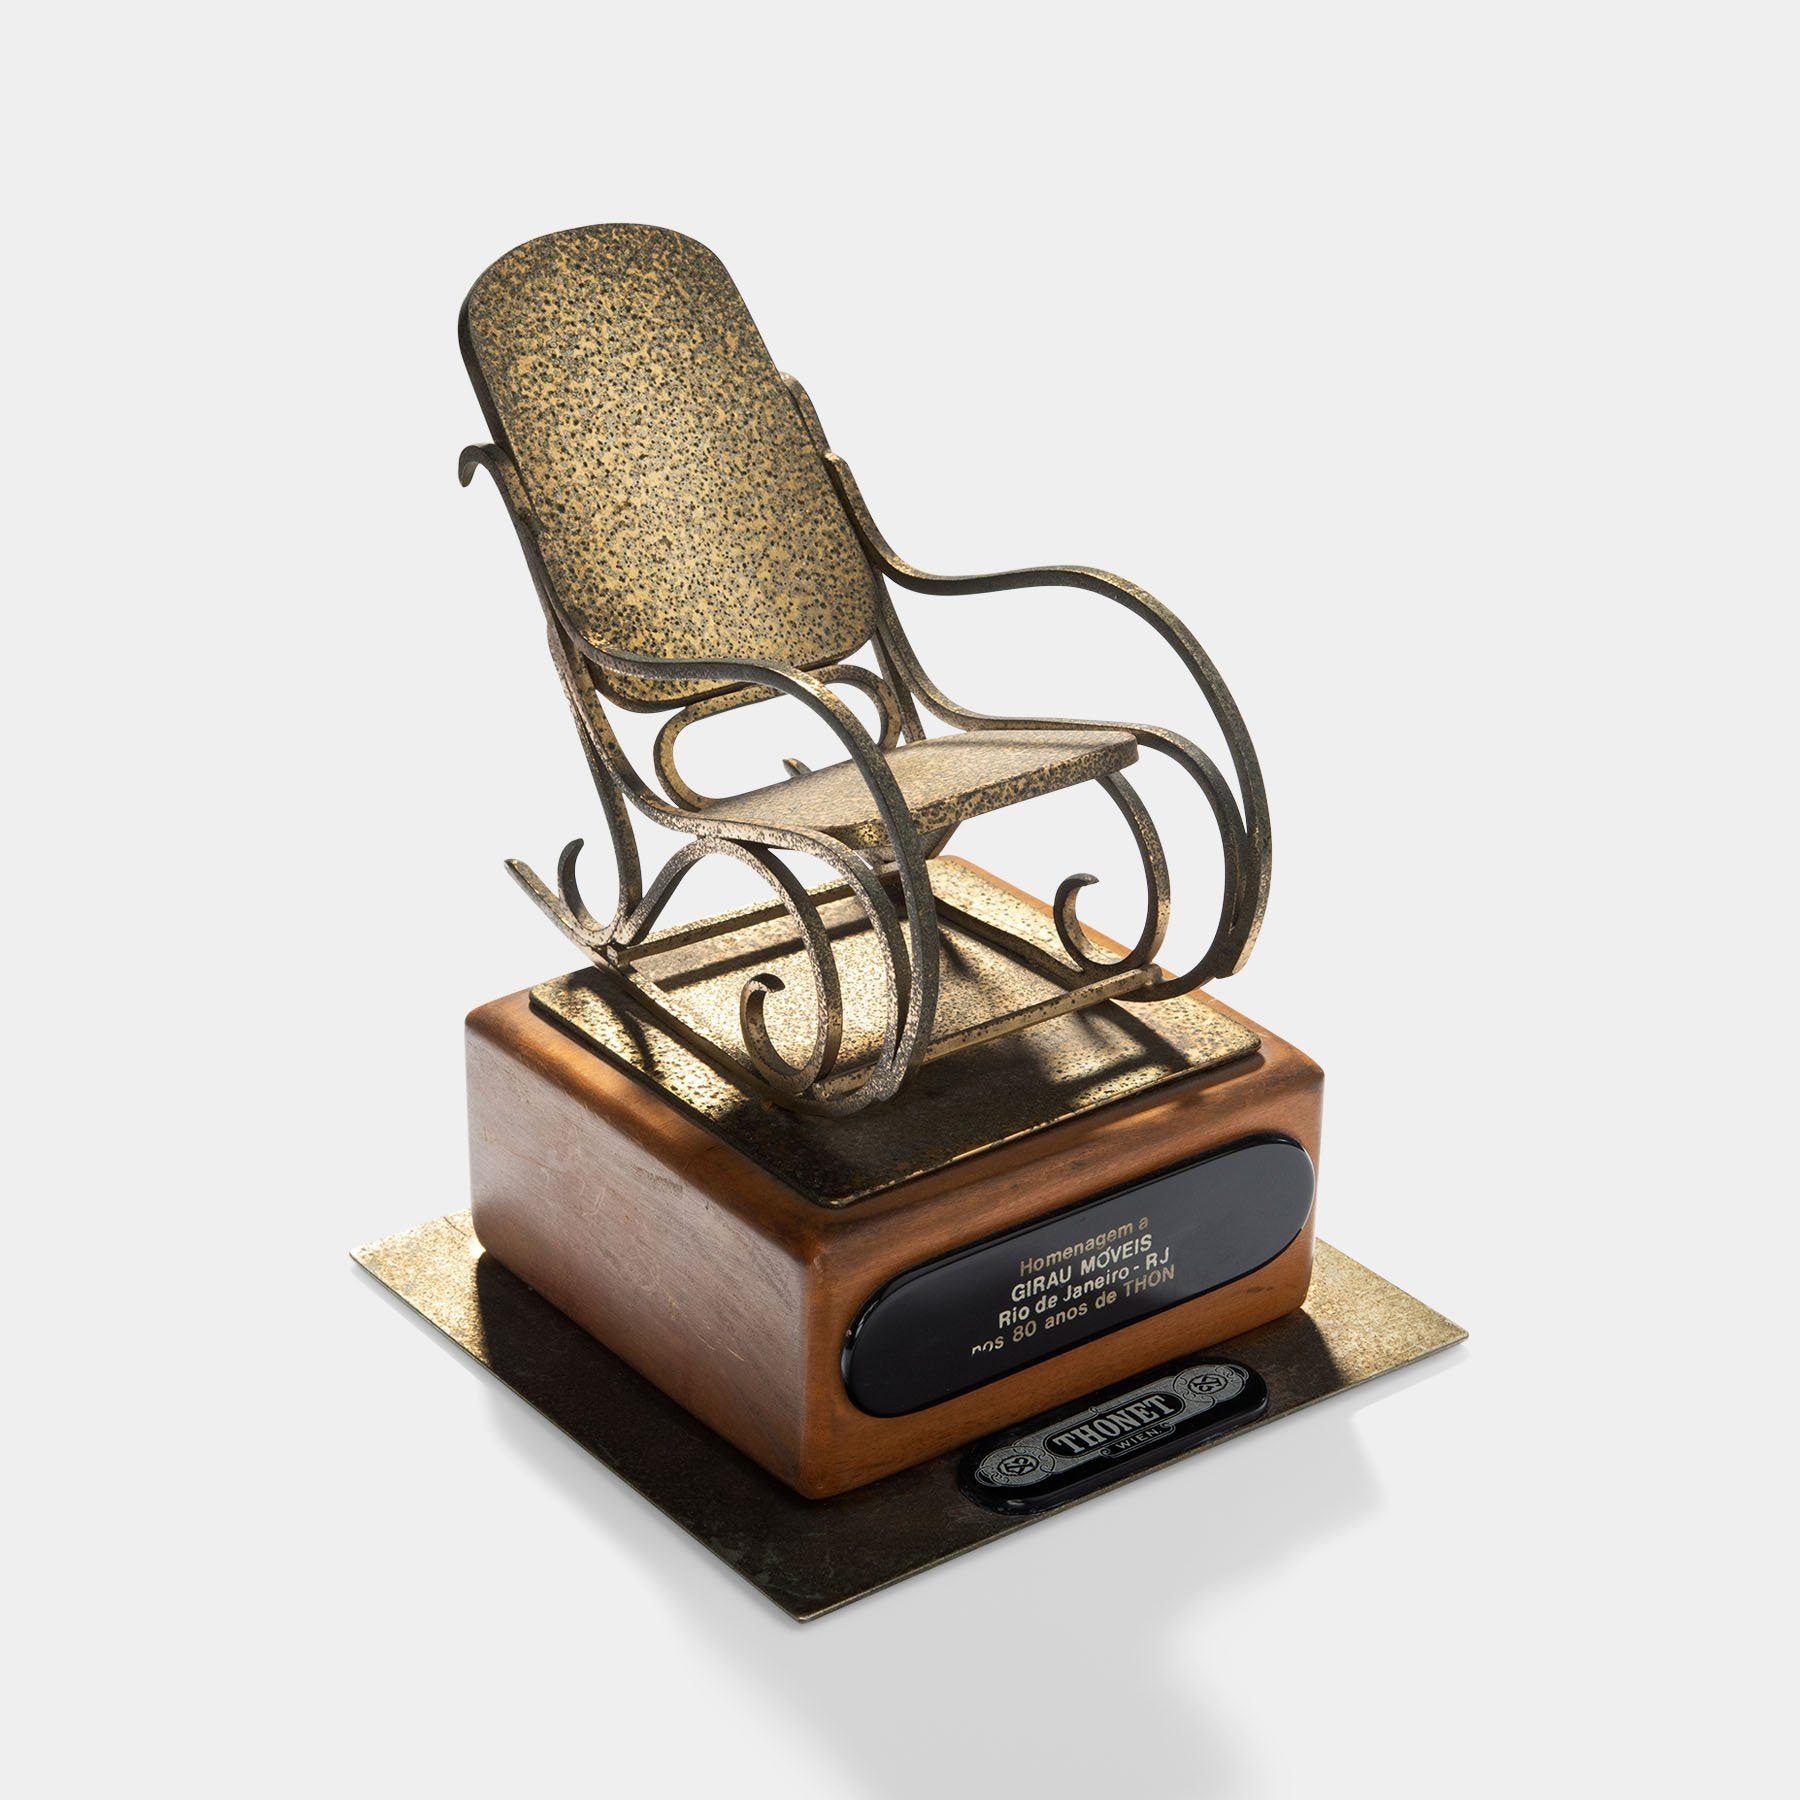 Unique 1960s Thonet No. 1 Rocking Chair Award